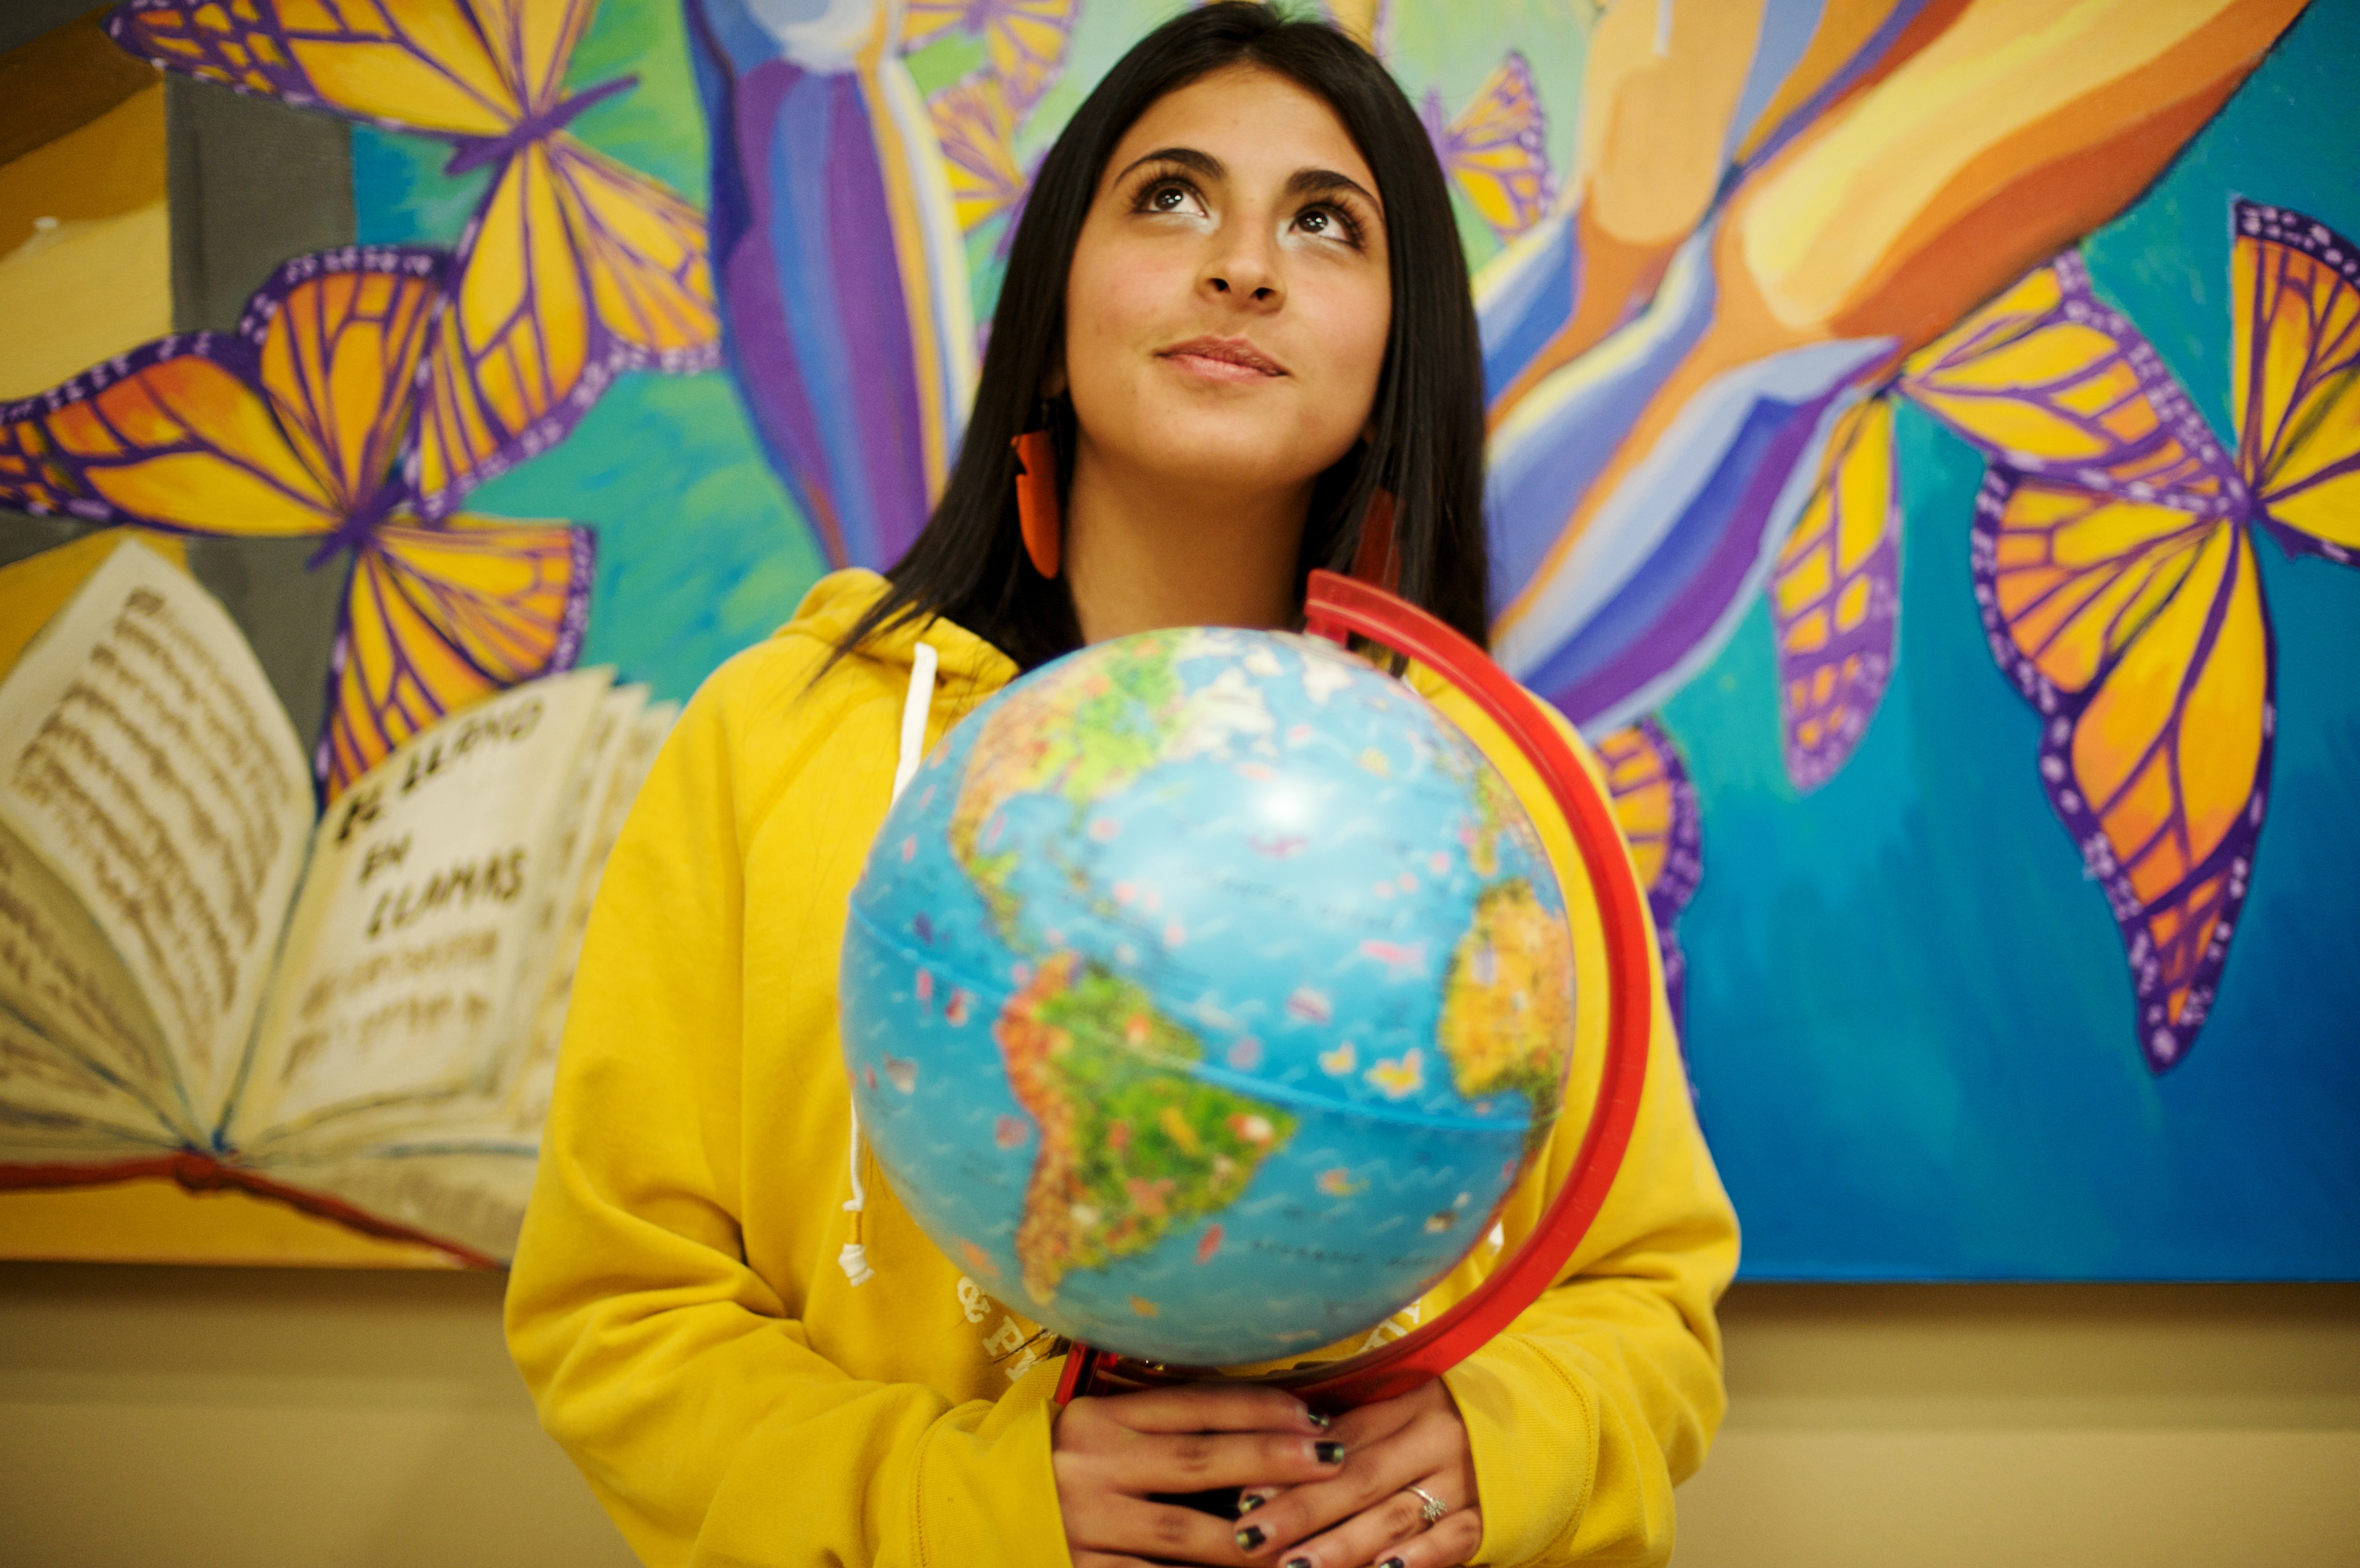 Student holding globe